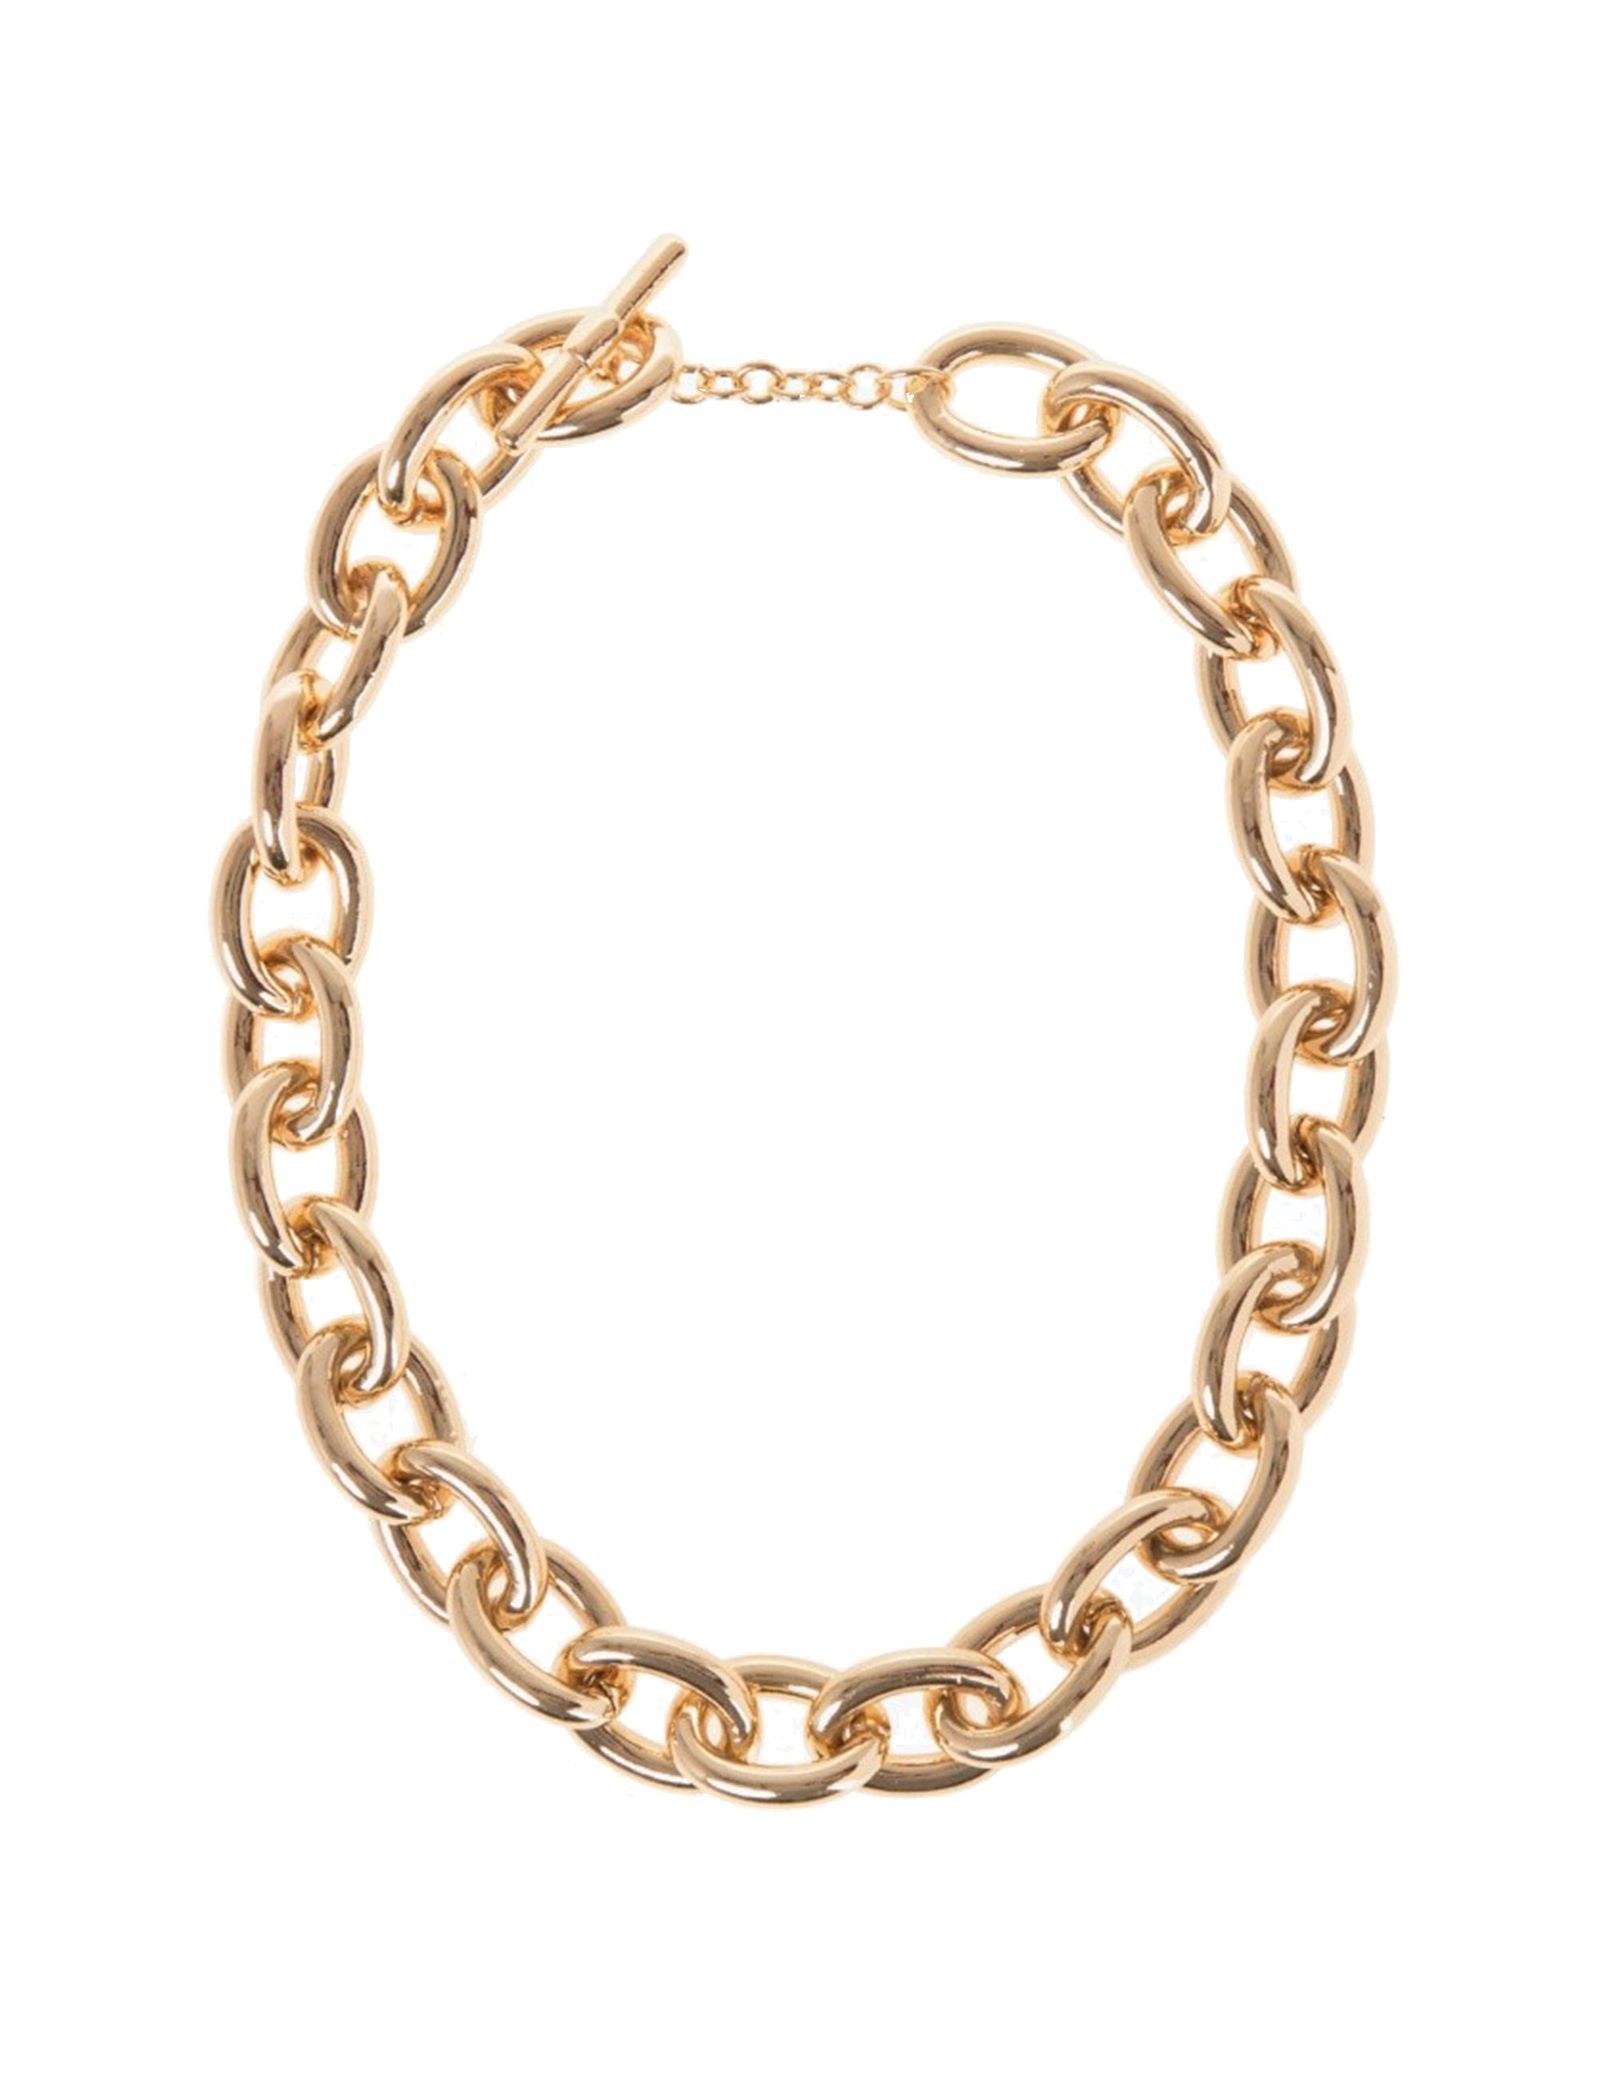 گردنبند زنجیری زنانه - پارفوا - طلايي - 2